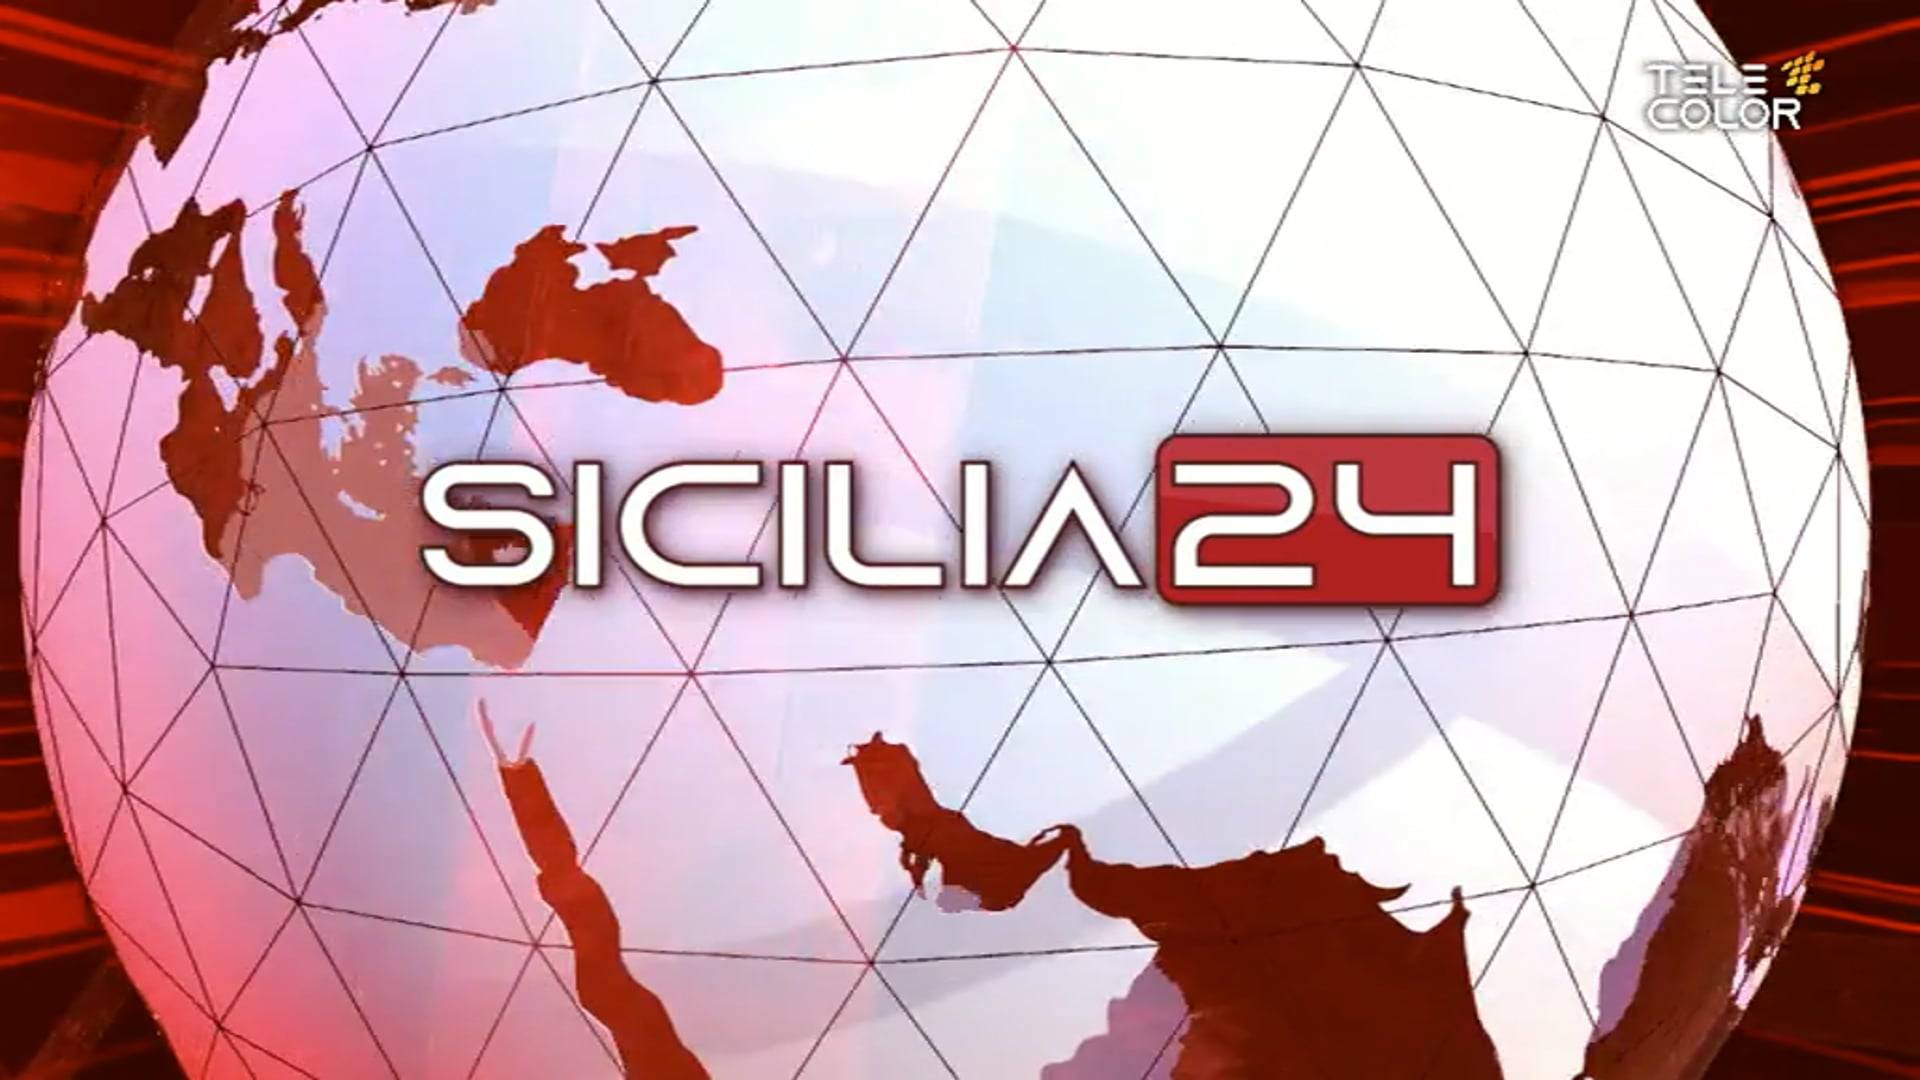 sicilia24-rassegna-stampa-31-marzo-2022-vimeo-thumbnail.jpg